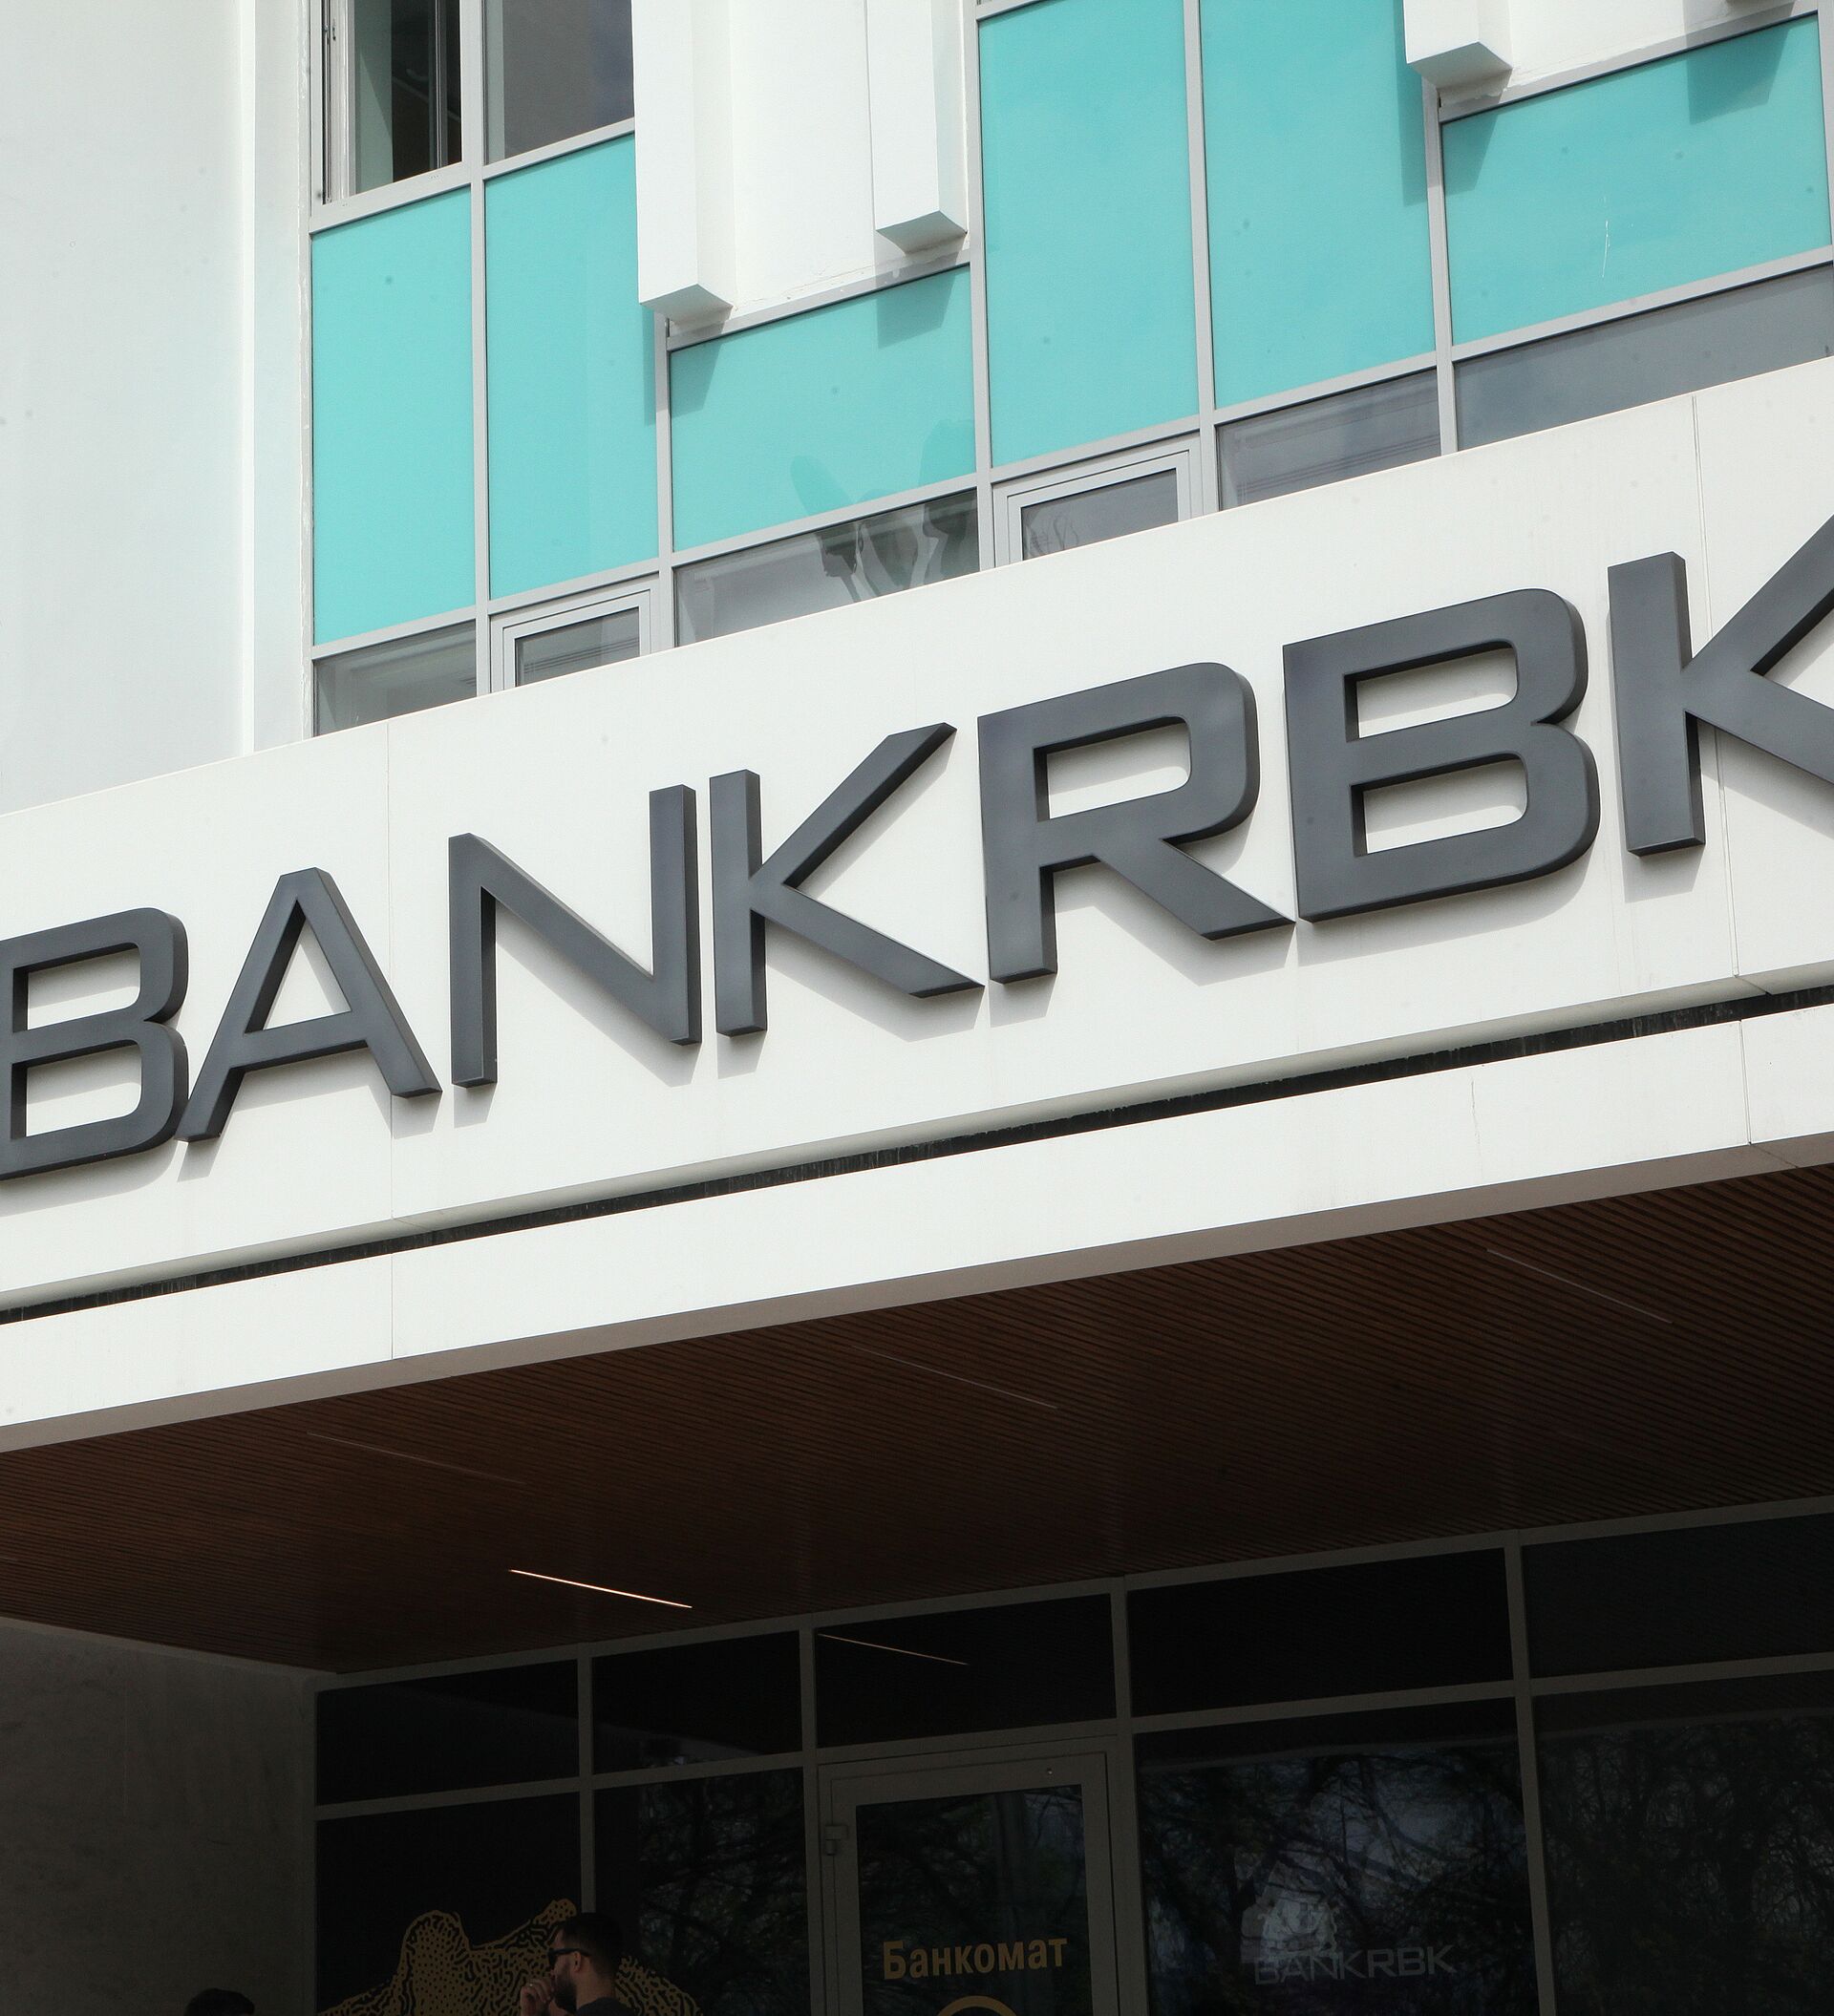 S p banking. РБК банк. P банк. Фото здания RBK Bank.